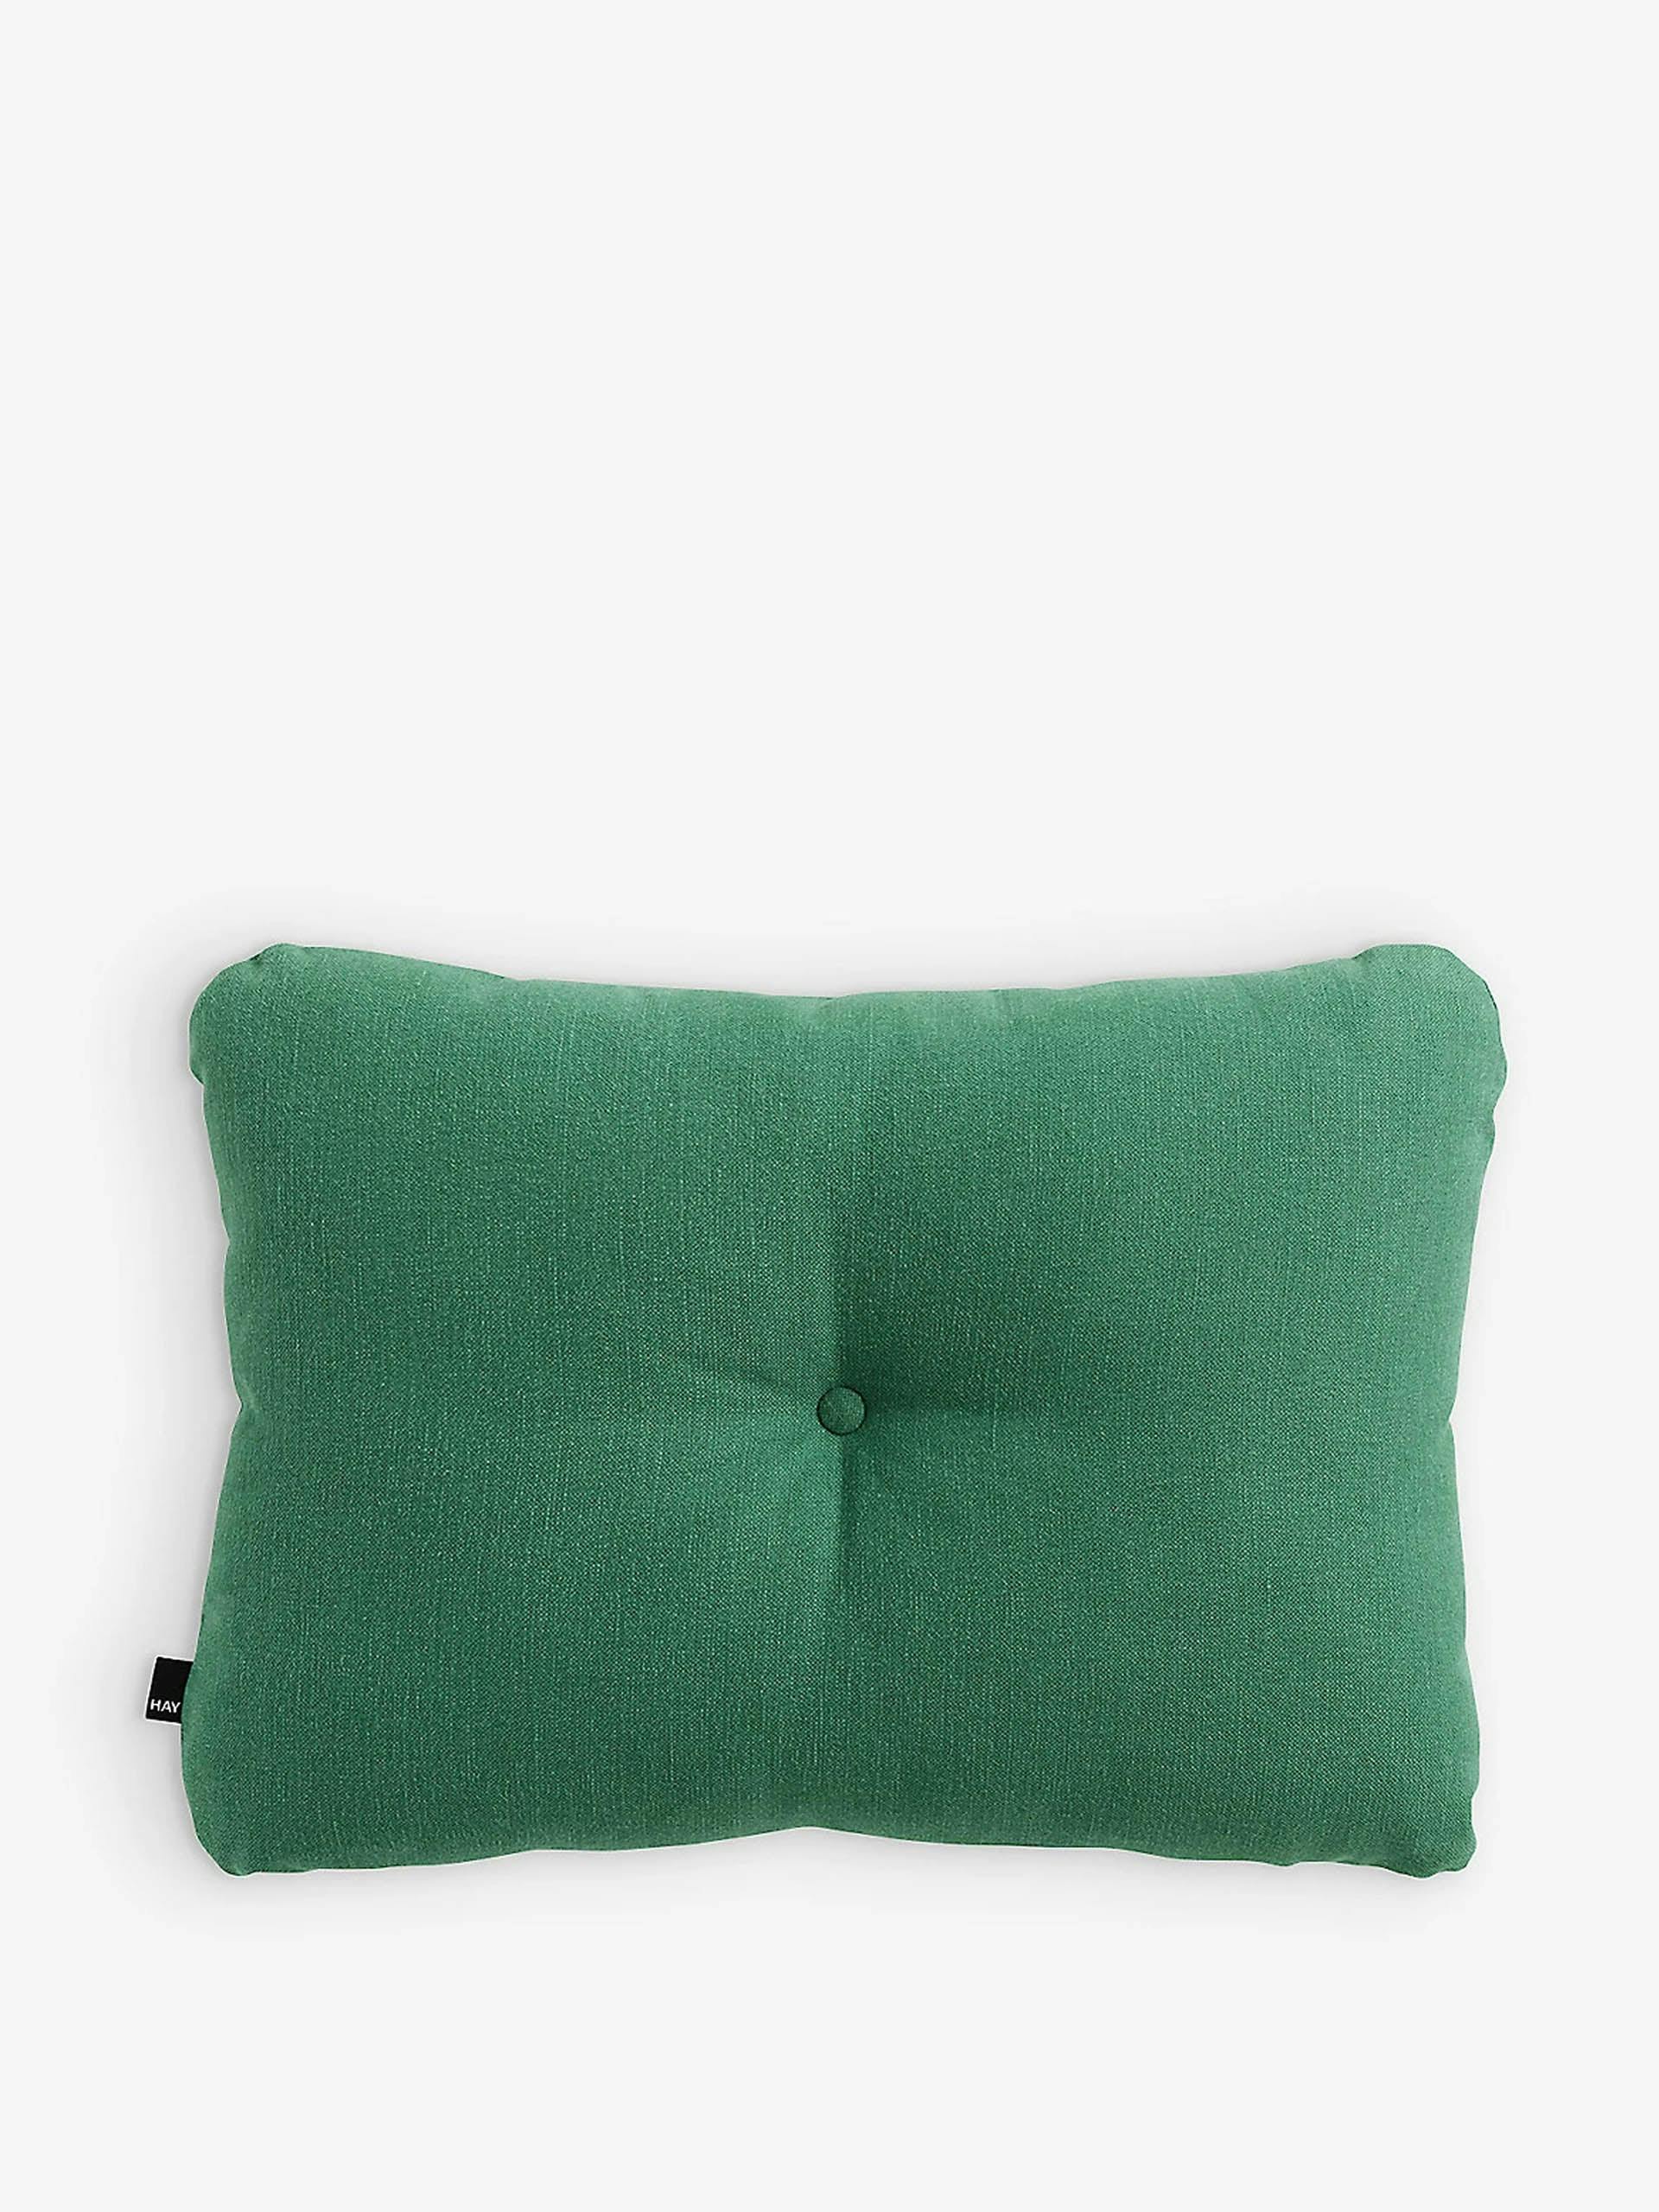 Green cotton and linen blend cushion